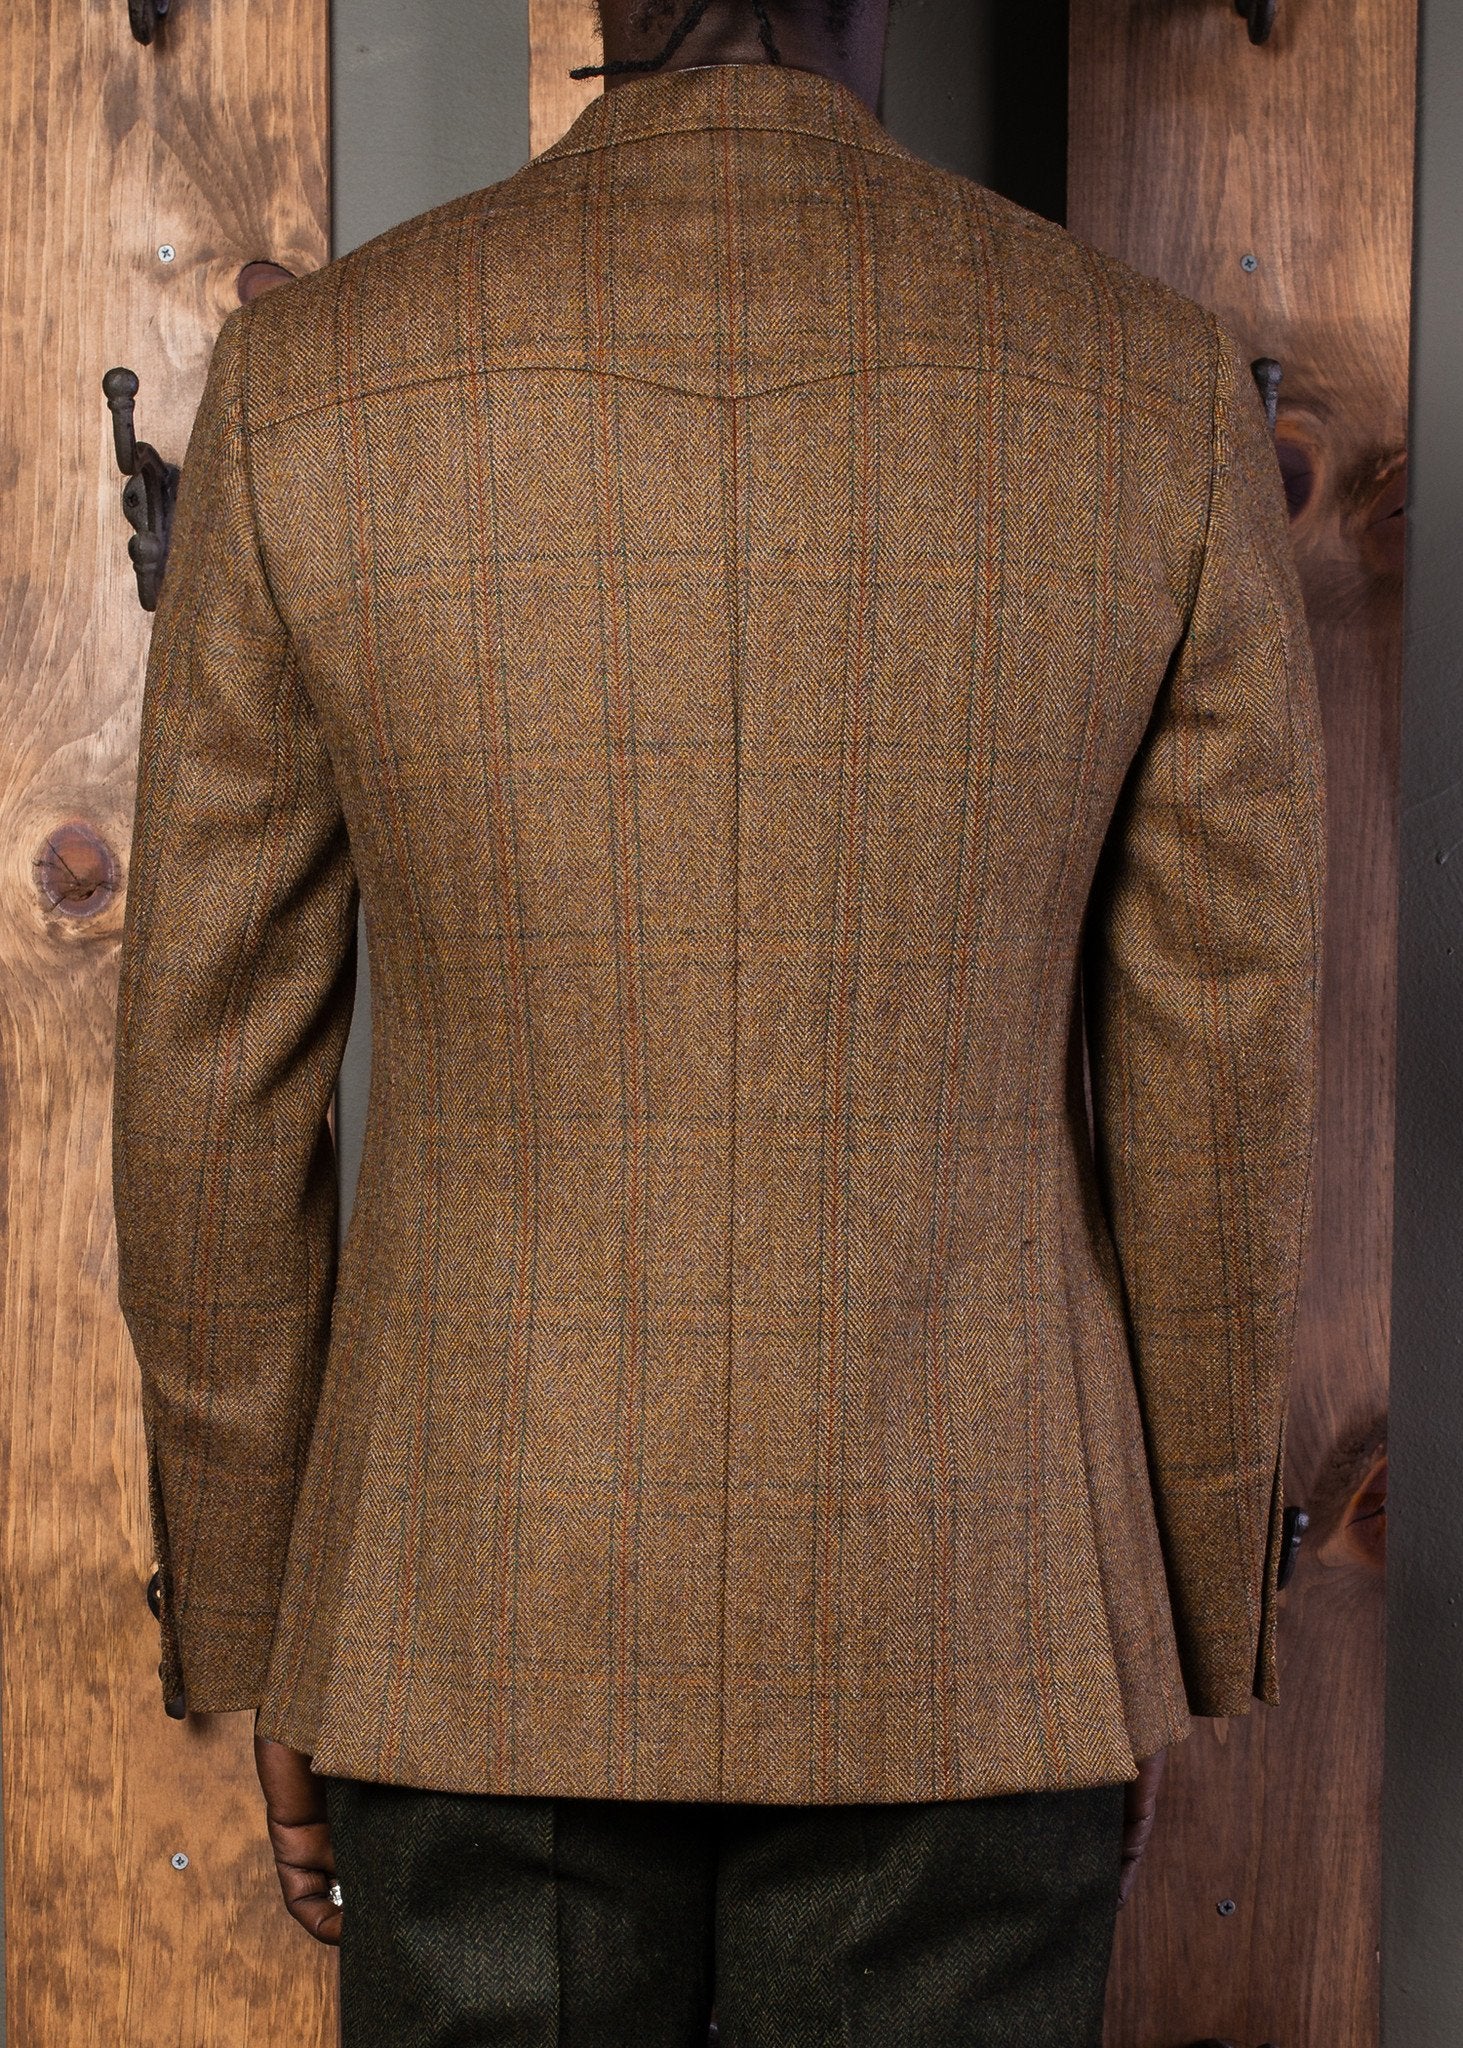 Crossley Tweed Jacket